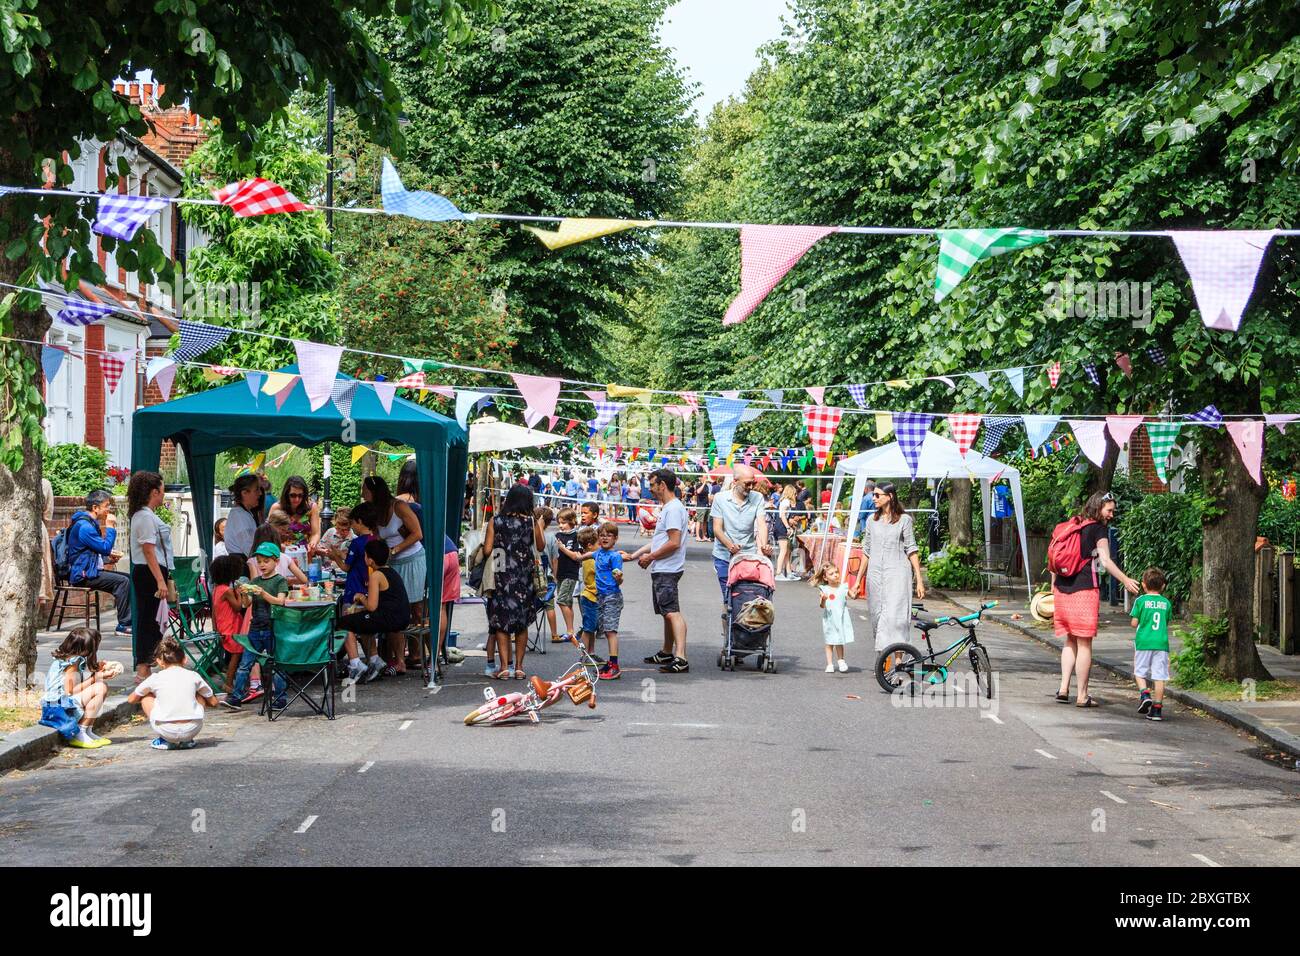 Harberton Road summer street party, June 2018, London, UK Stock Photo